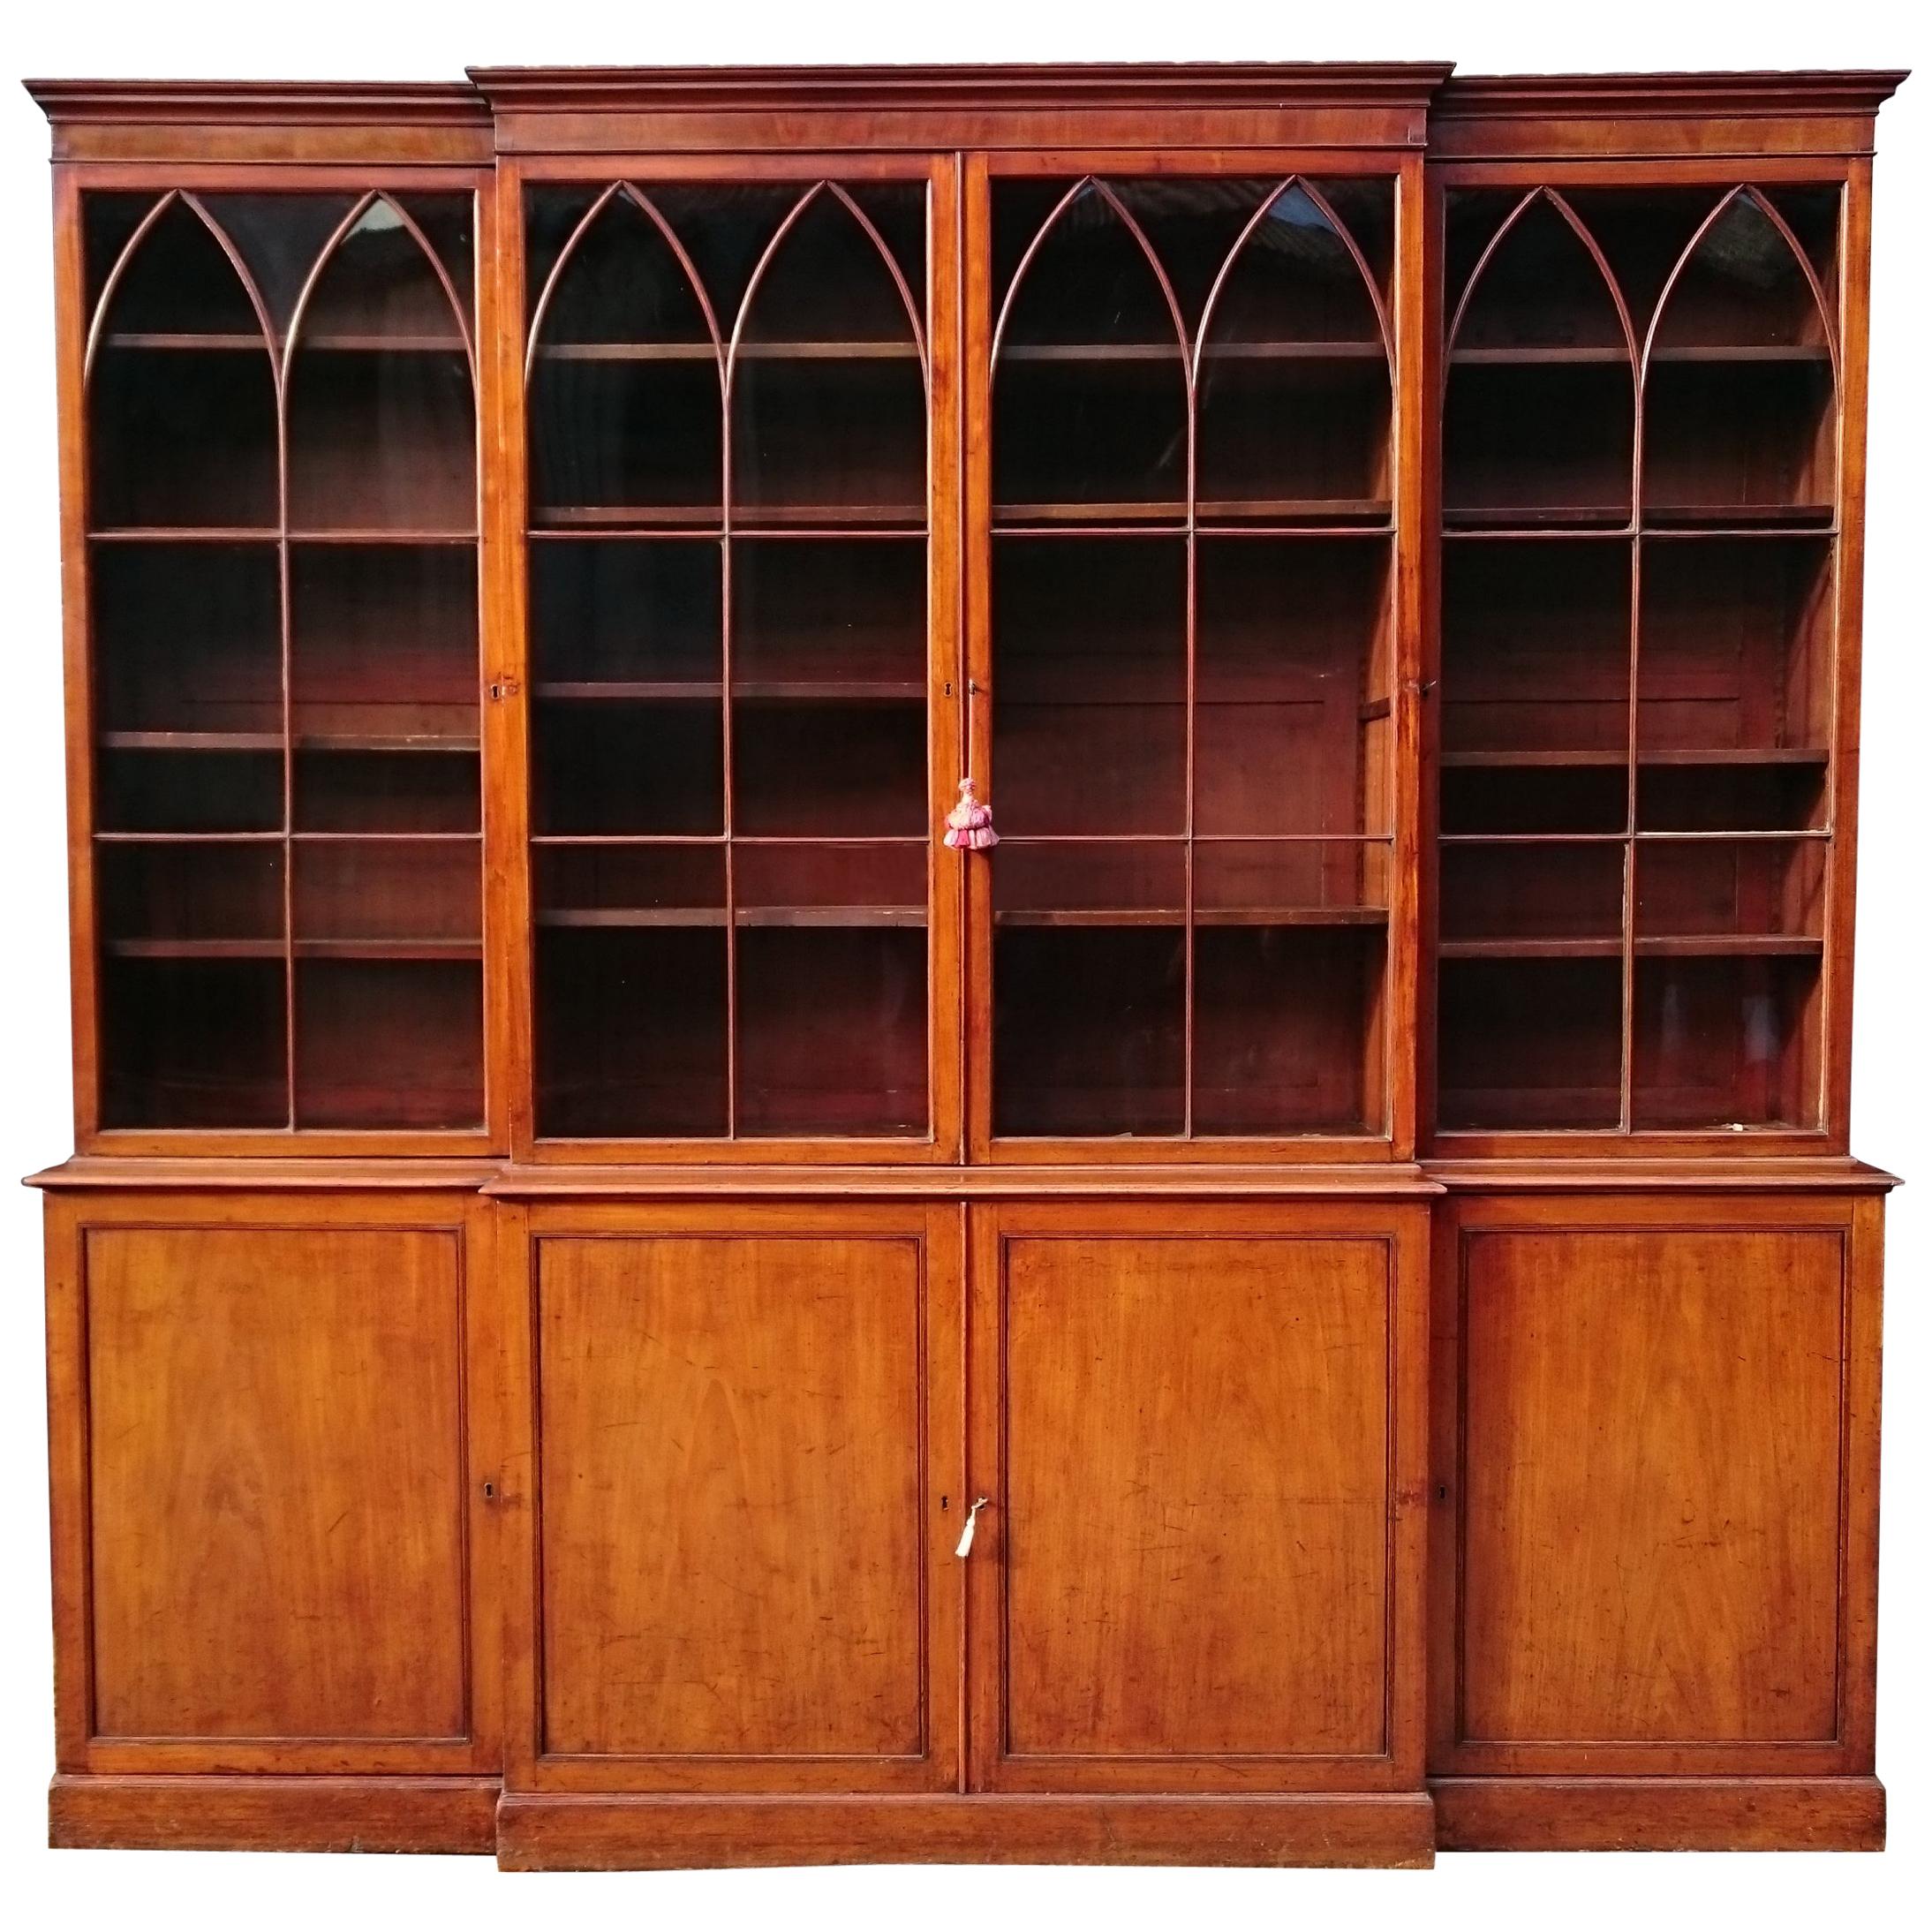 18th Century George III Period Mahogany Breakfront Bookcase